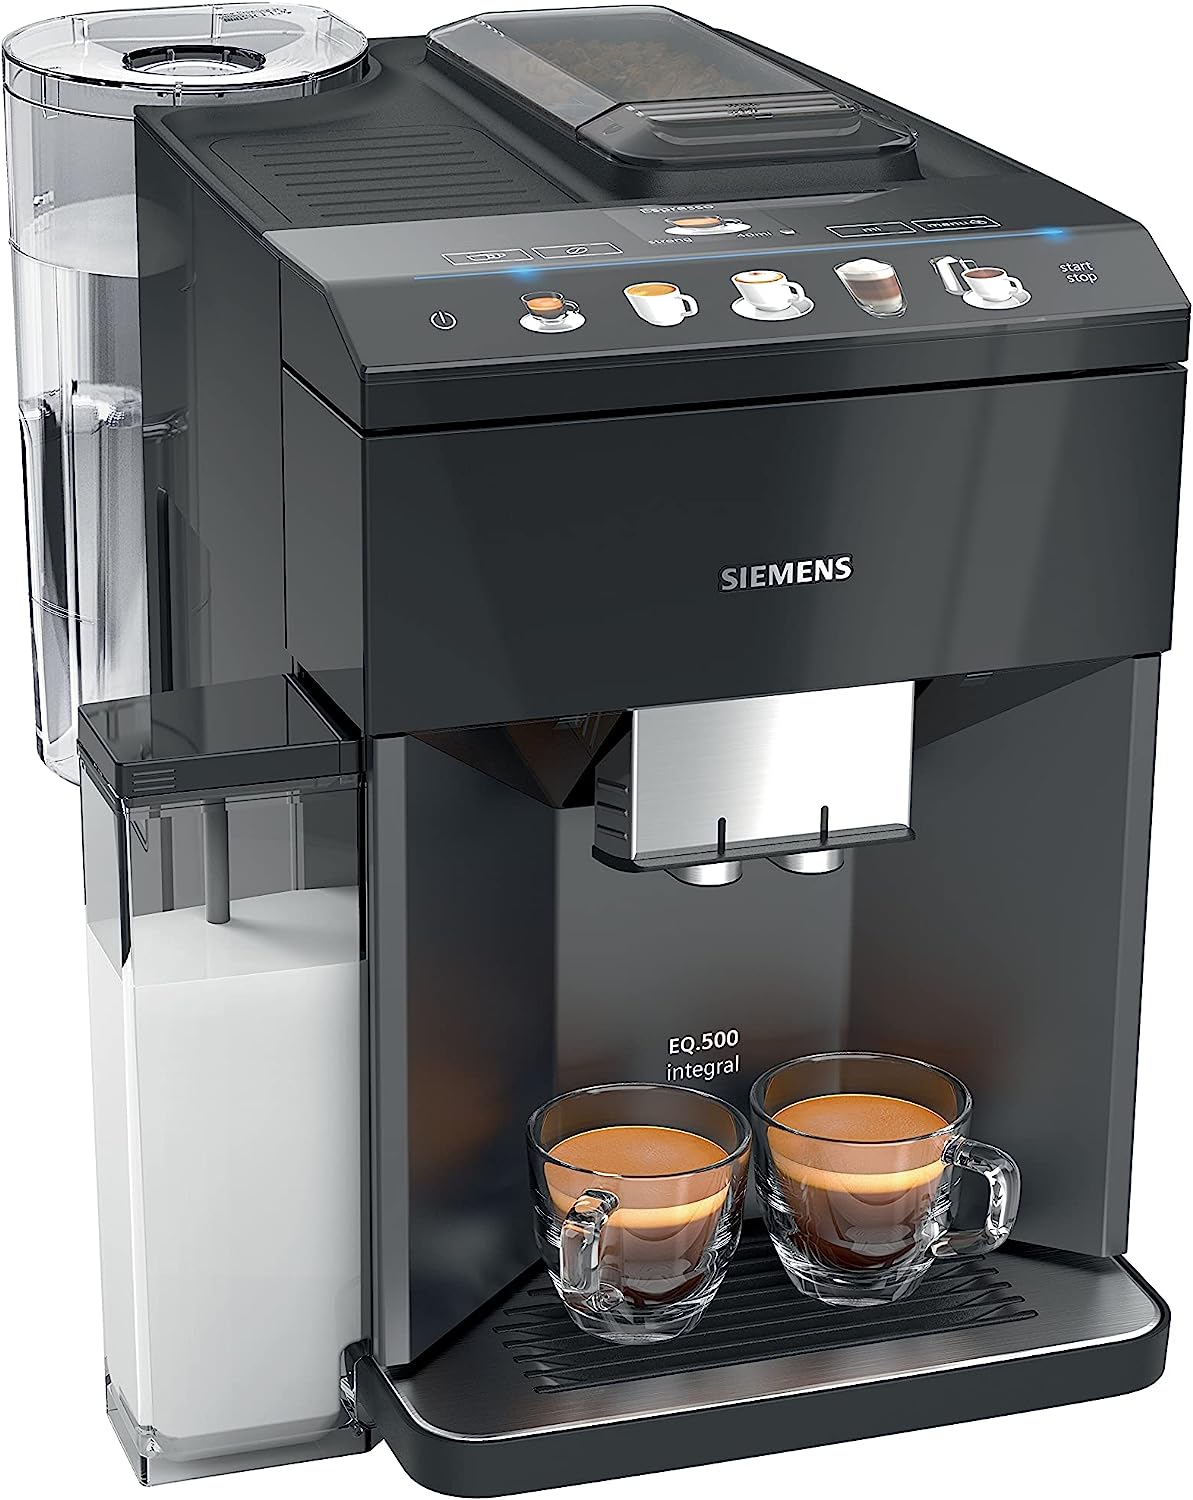 Siemens EQ.500 TQ505R09 Bean to Cup Automatic Coffee Machine - Black best siemens coffee machines